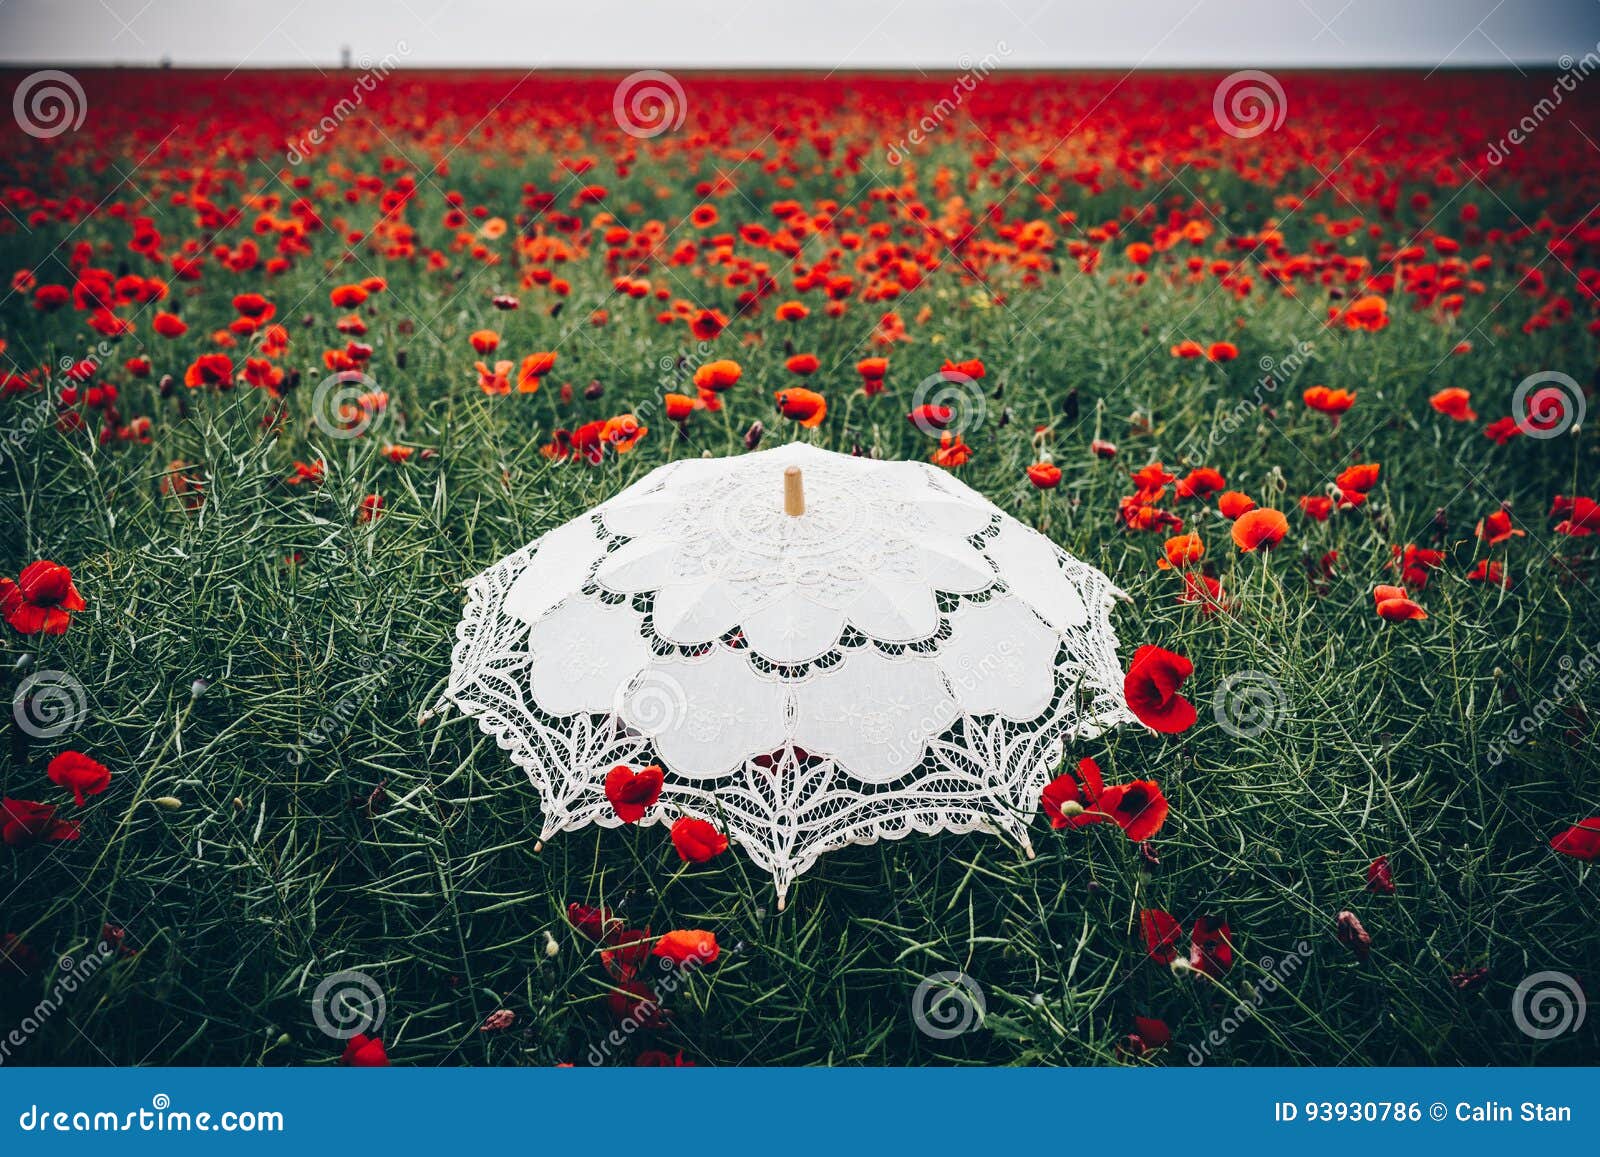 umbrella in poppies field. artistic interpretation.